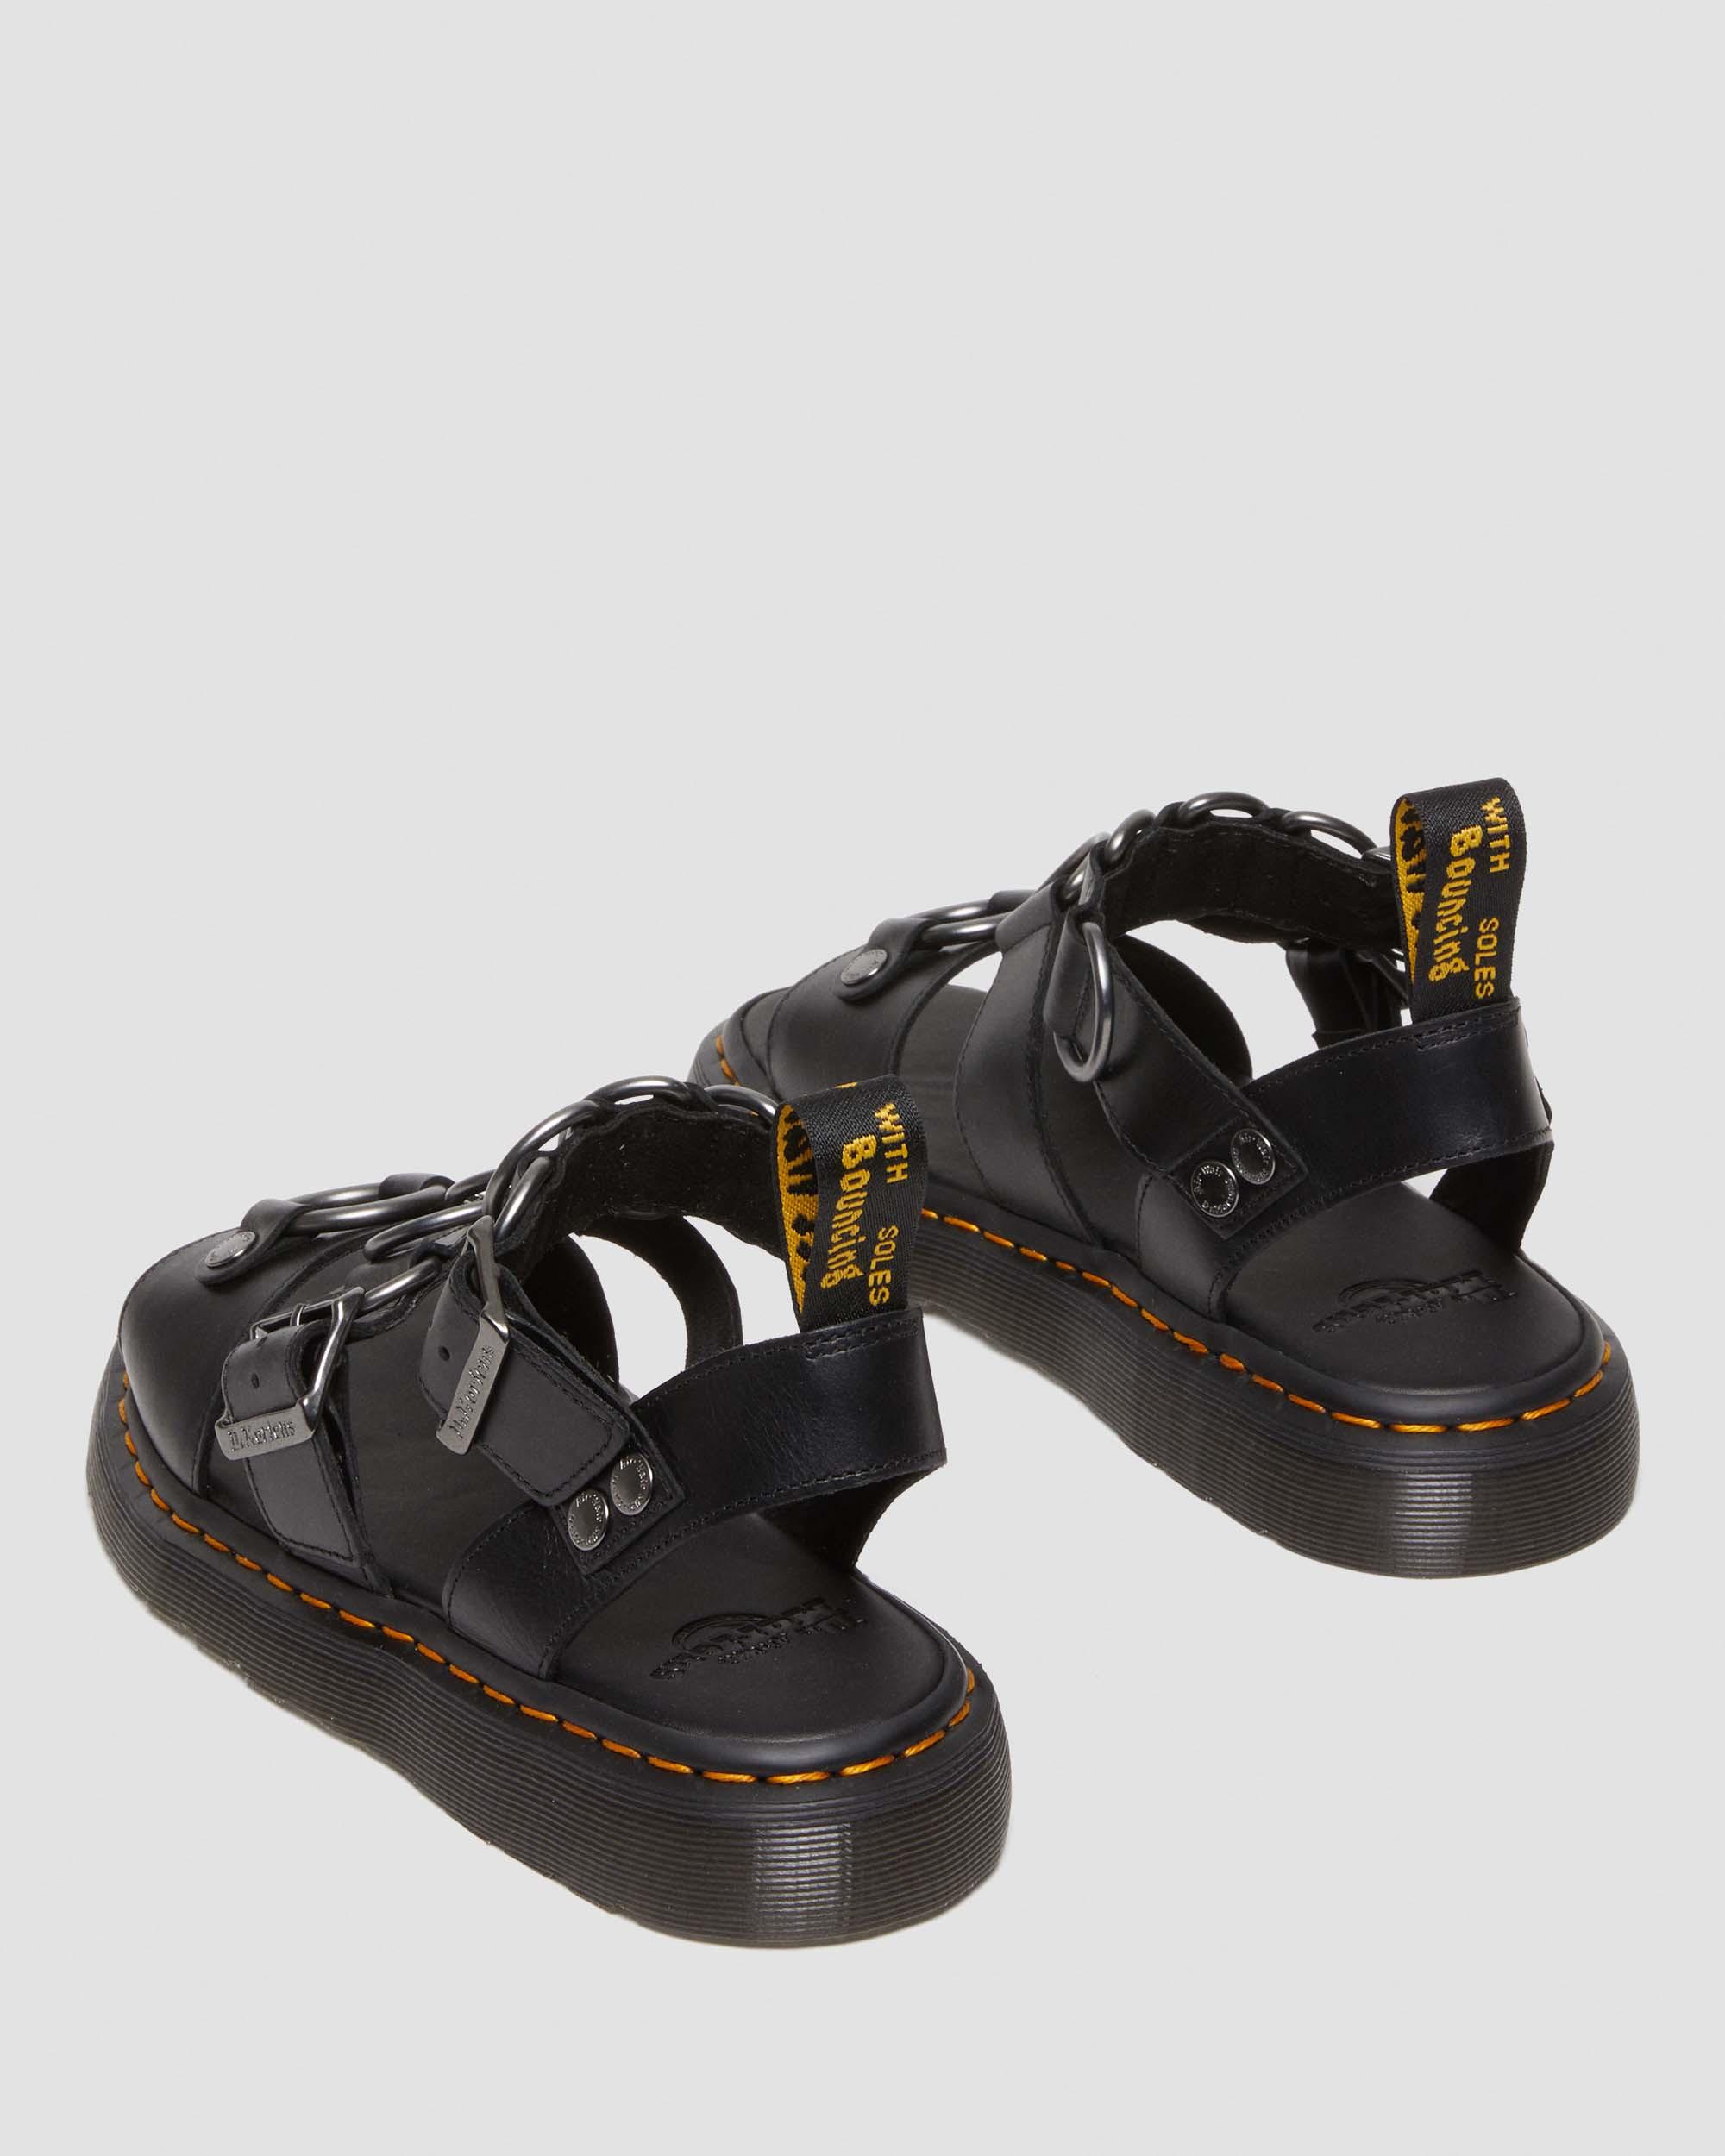 Gryphon Brando Black Leather Gladiator Sandals by Dr. Martens (Sale price!)